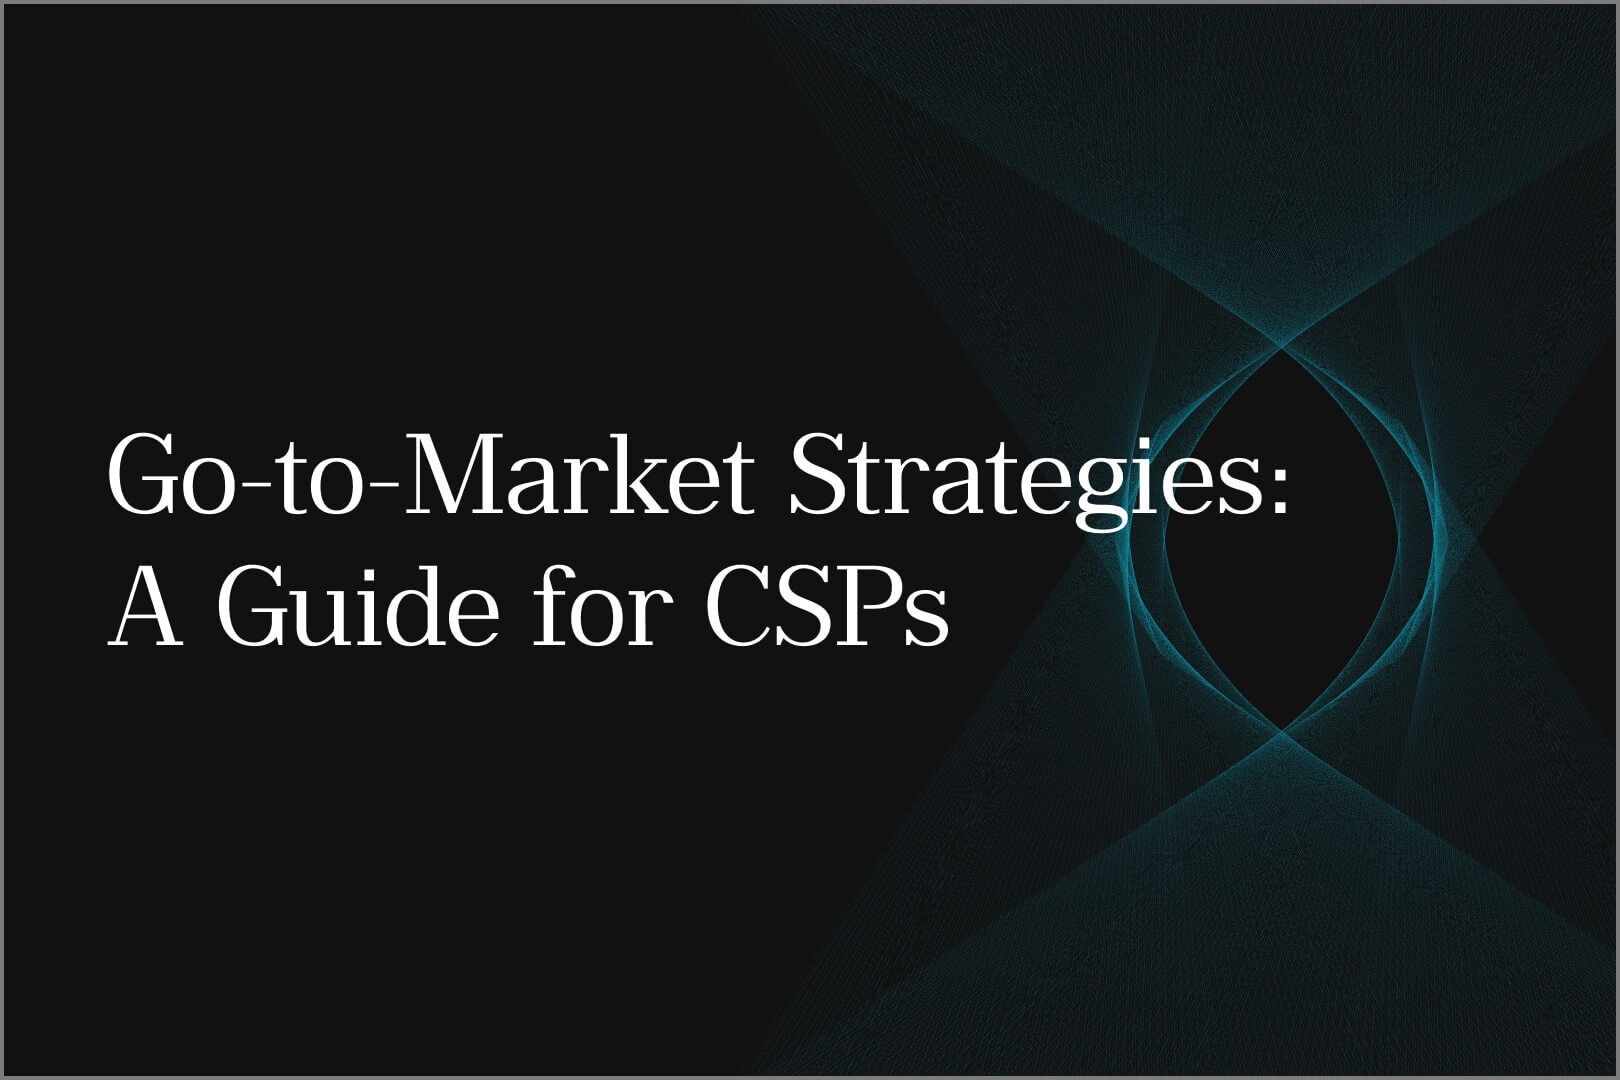 Go-to-Market Strategies